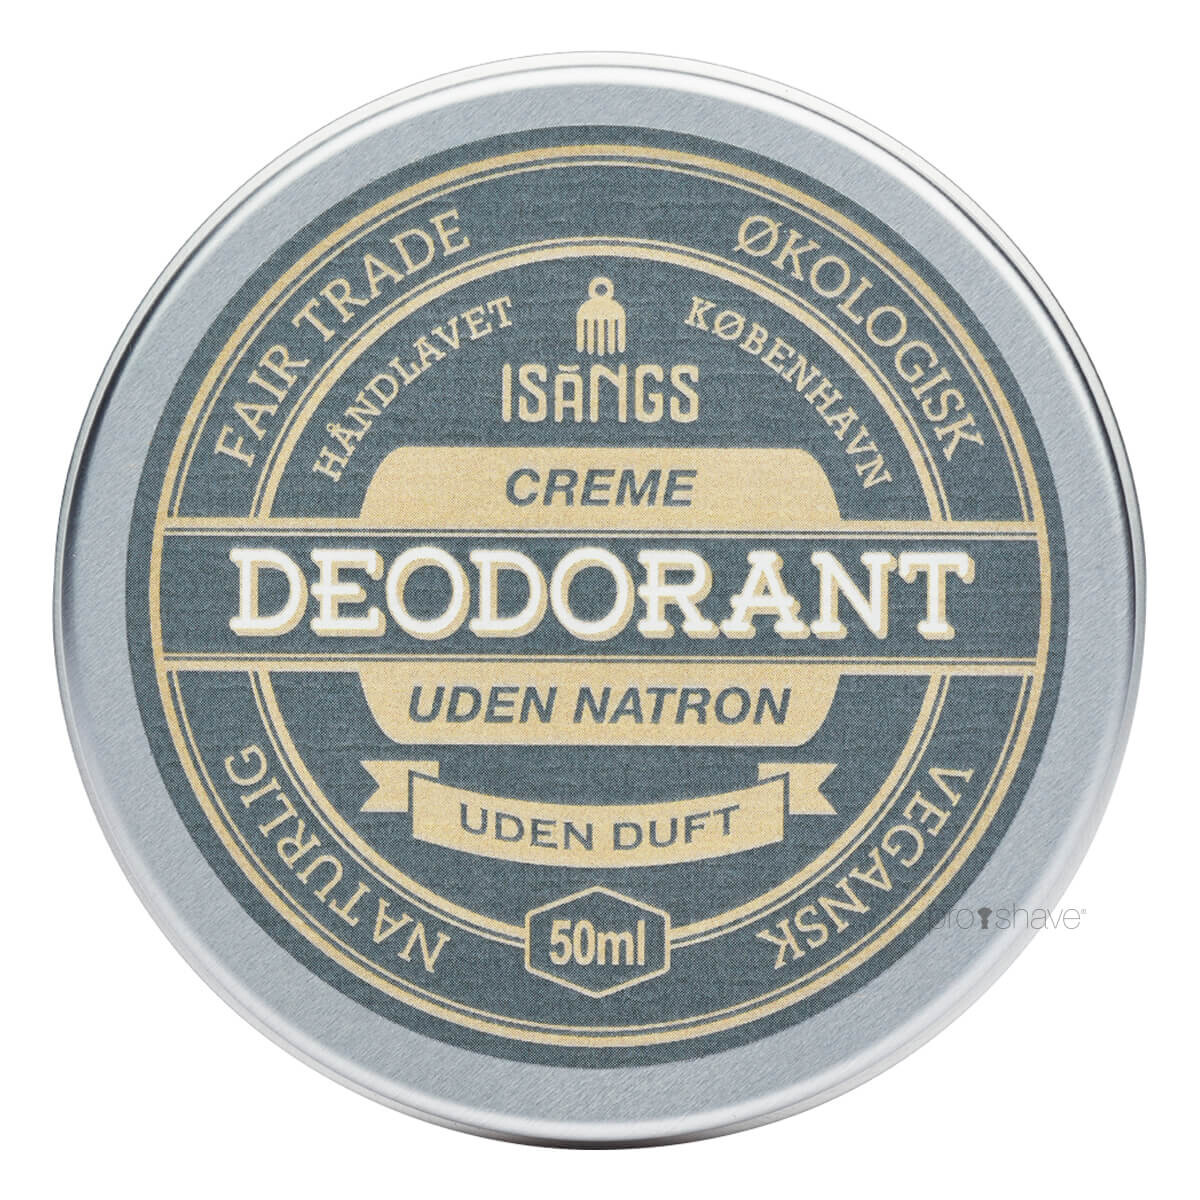 Se Isangs Creme Deodorant uden Natron, Uden duft, 50 ml. hos Proshave